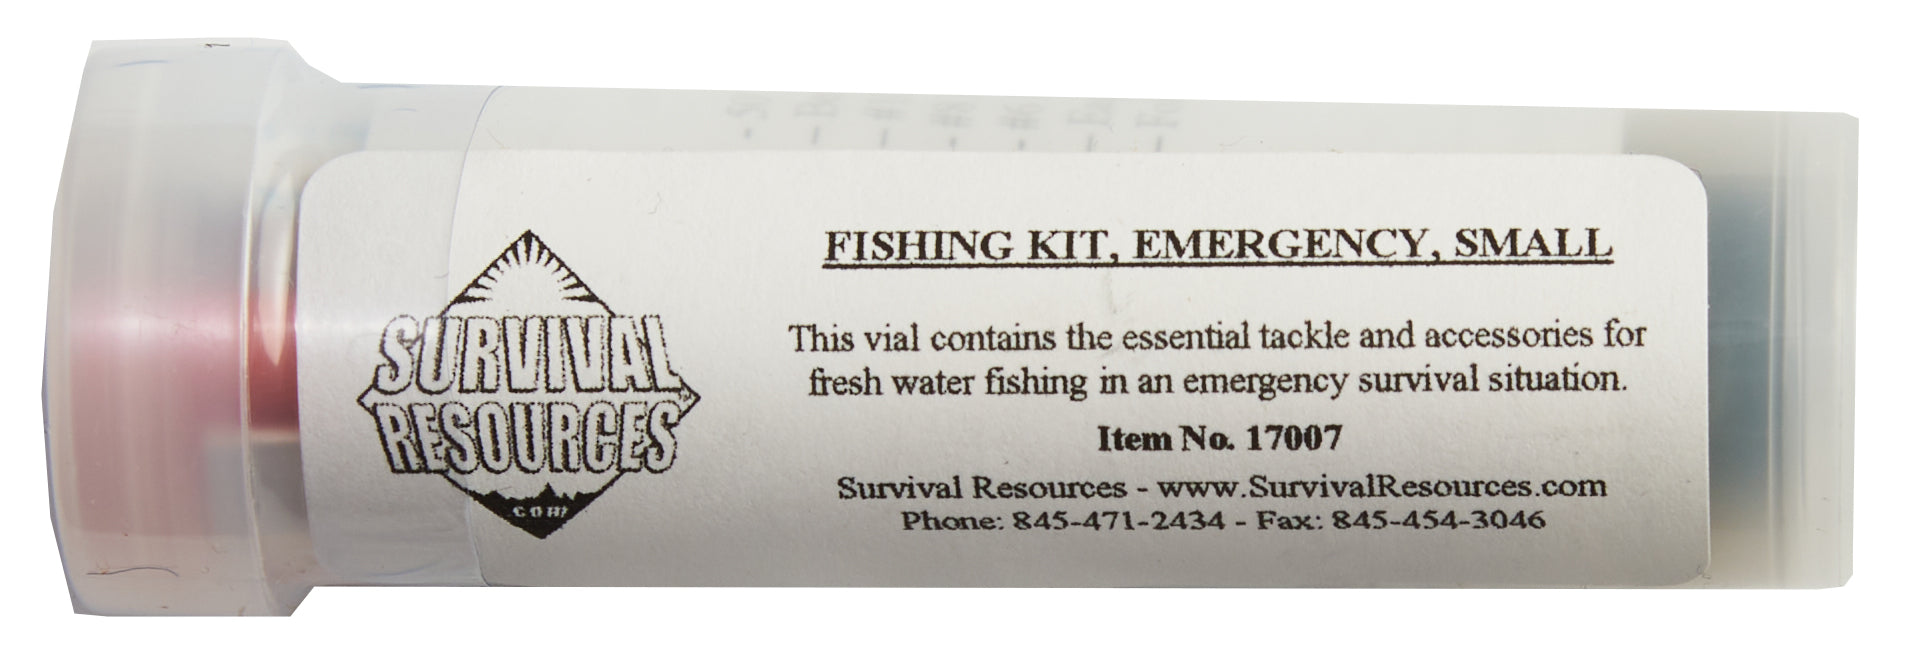 Emergency Fishing Kit (Small)